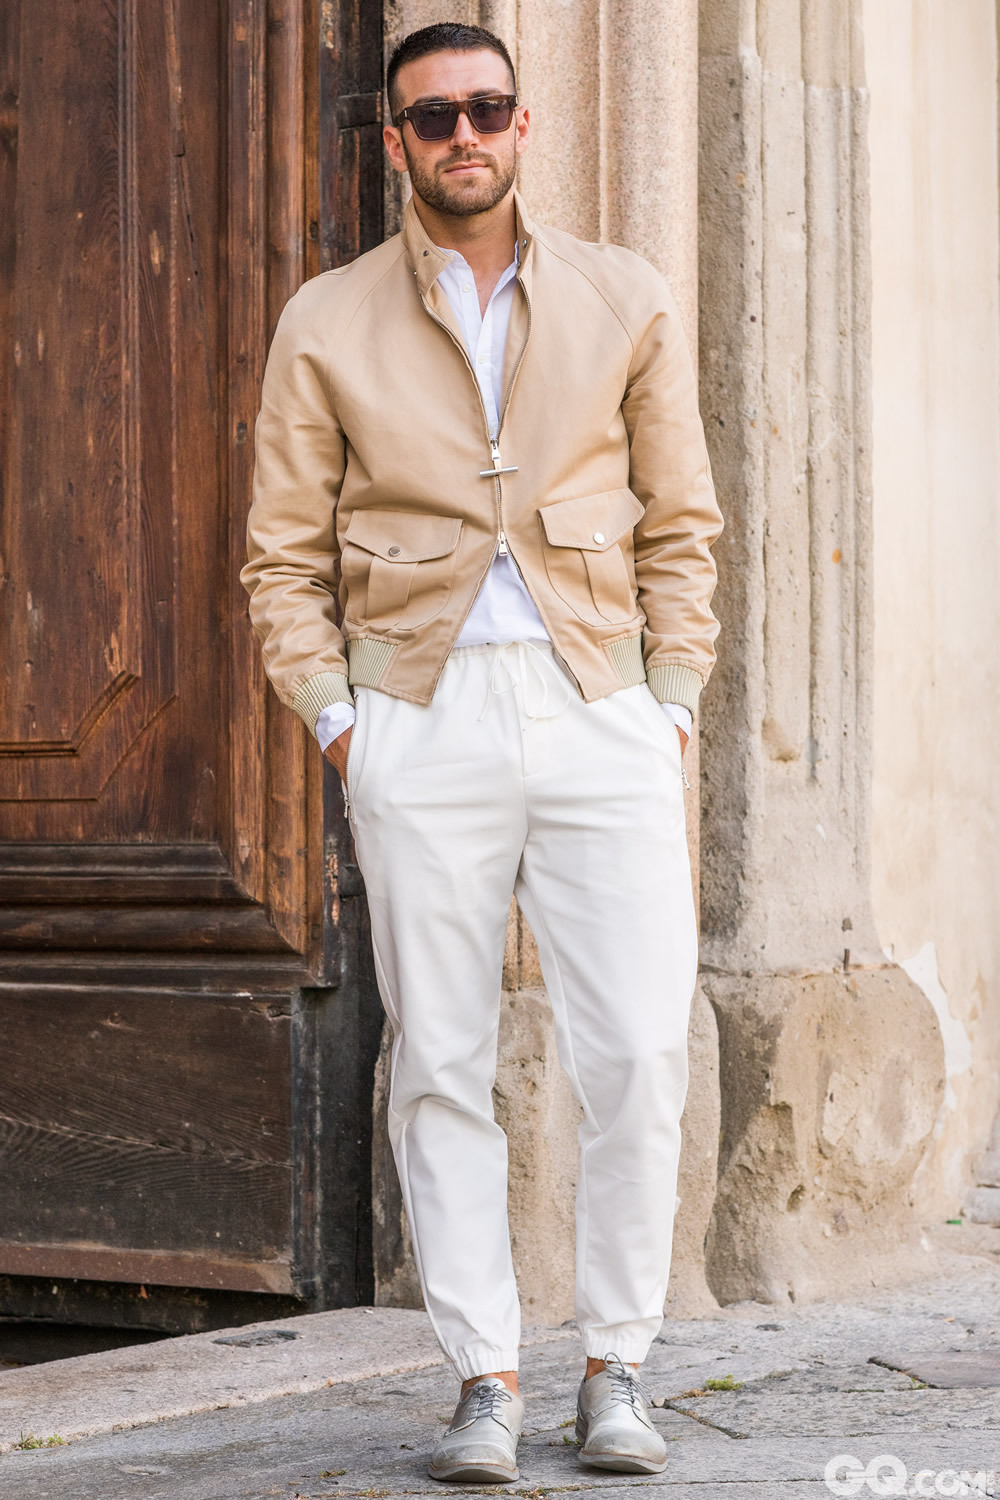 Mark
Jacket: Louis Vuitton
Shirt: COS
Pants: Phillip Lim
Shoes: Margiela
Sunglasses: Cinderella

Inspiration: Always on Safari